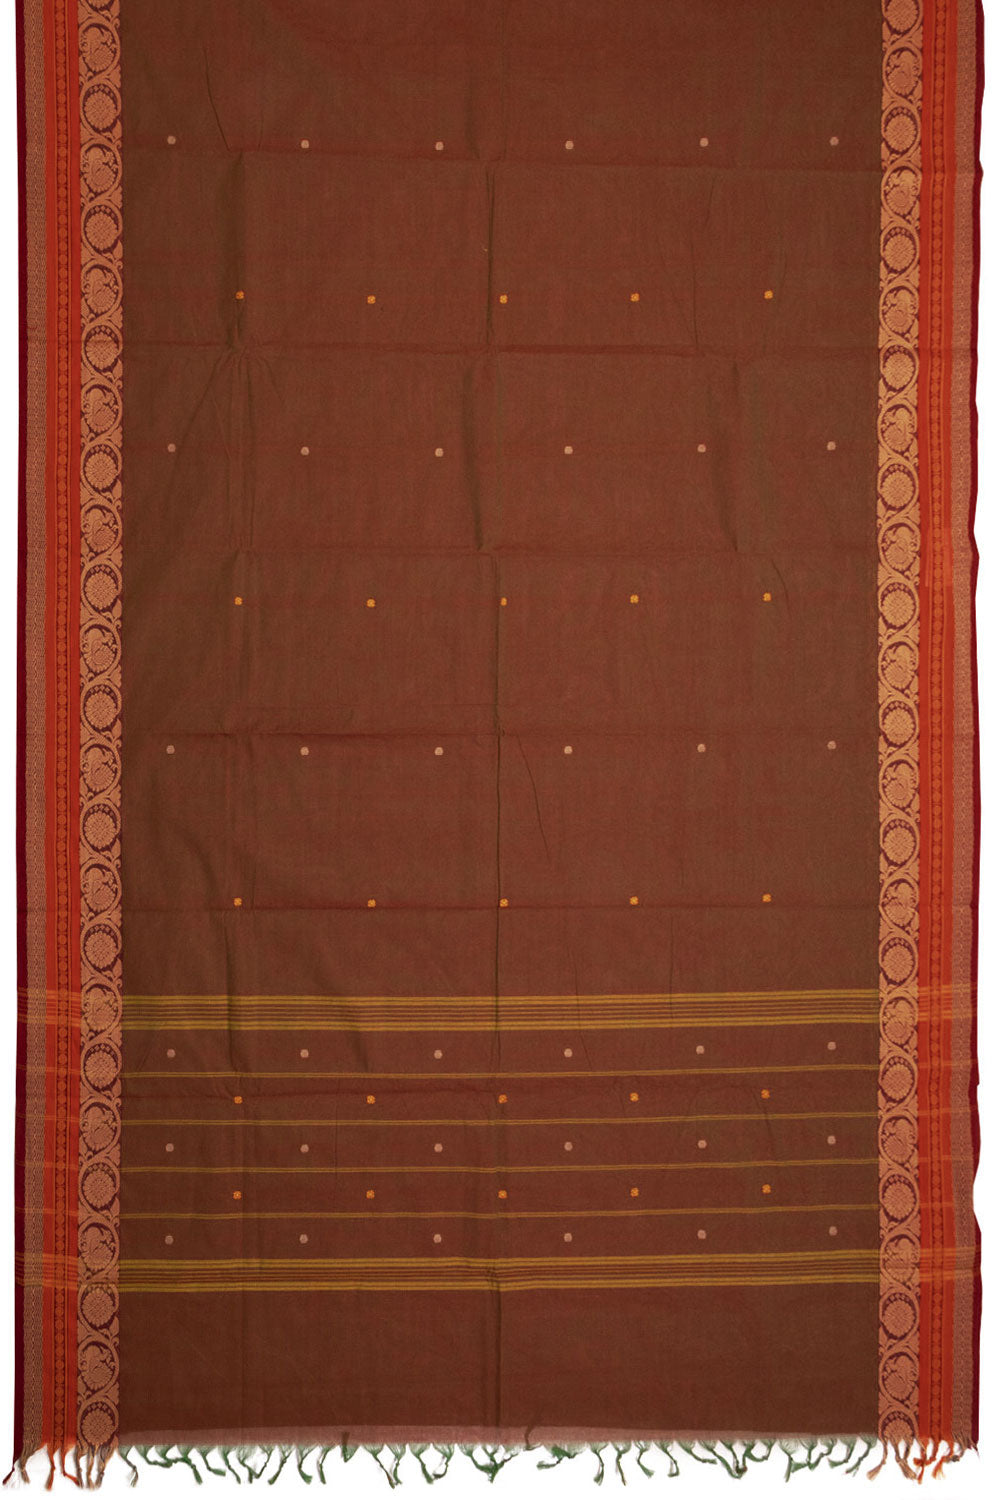 Dual Shot Handloom Chettinad Cotton Saree 10070018 - Avishya